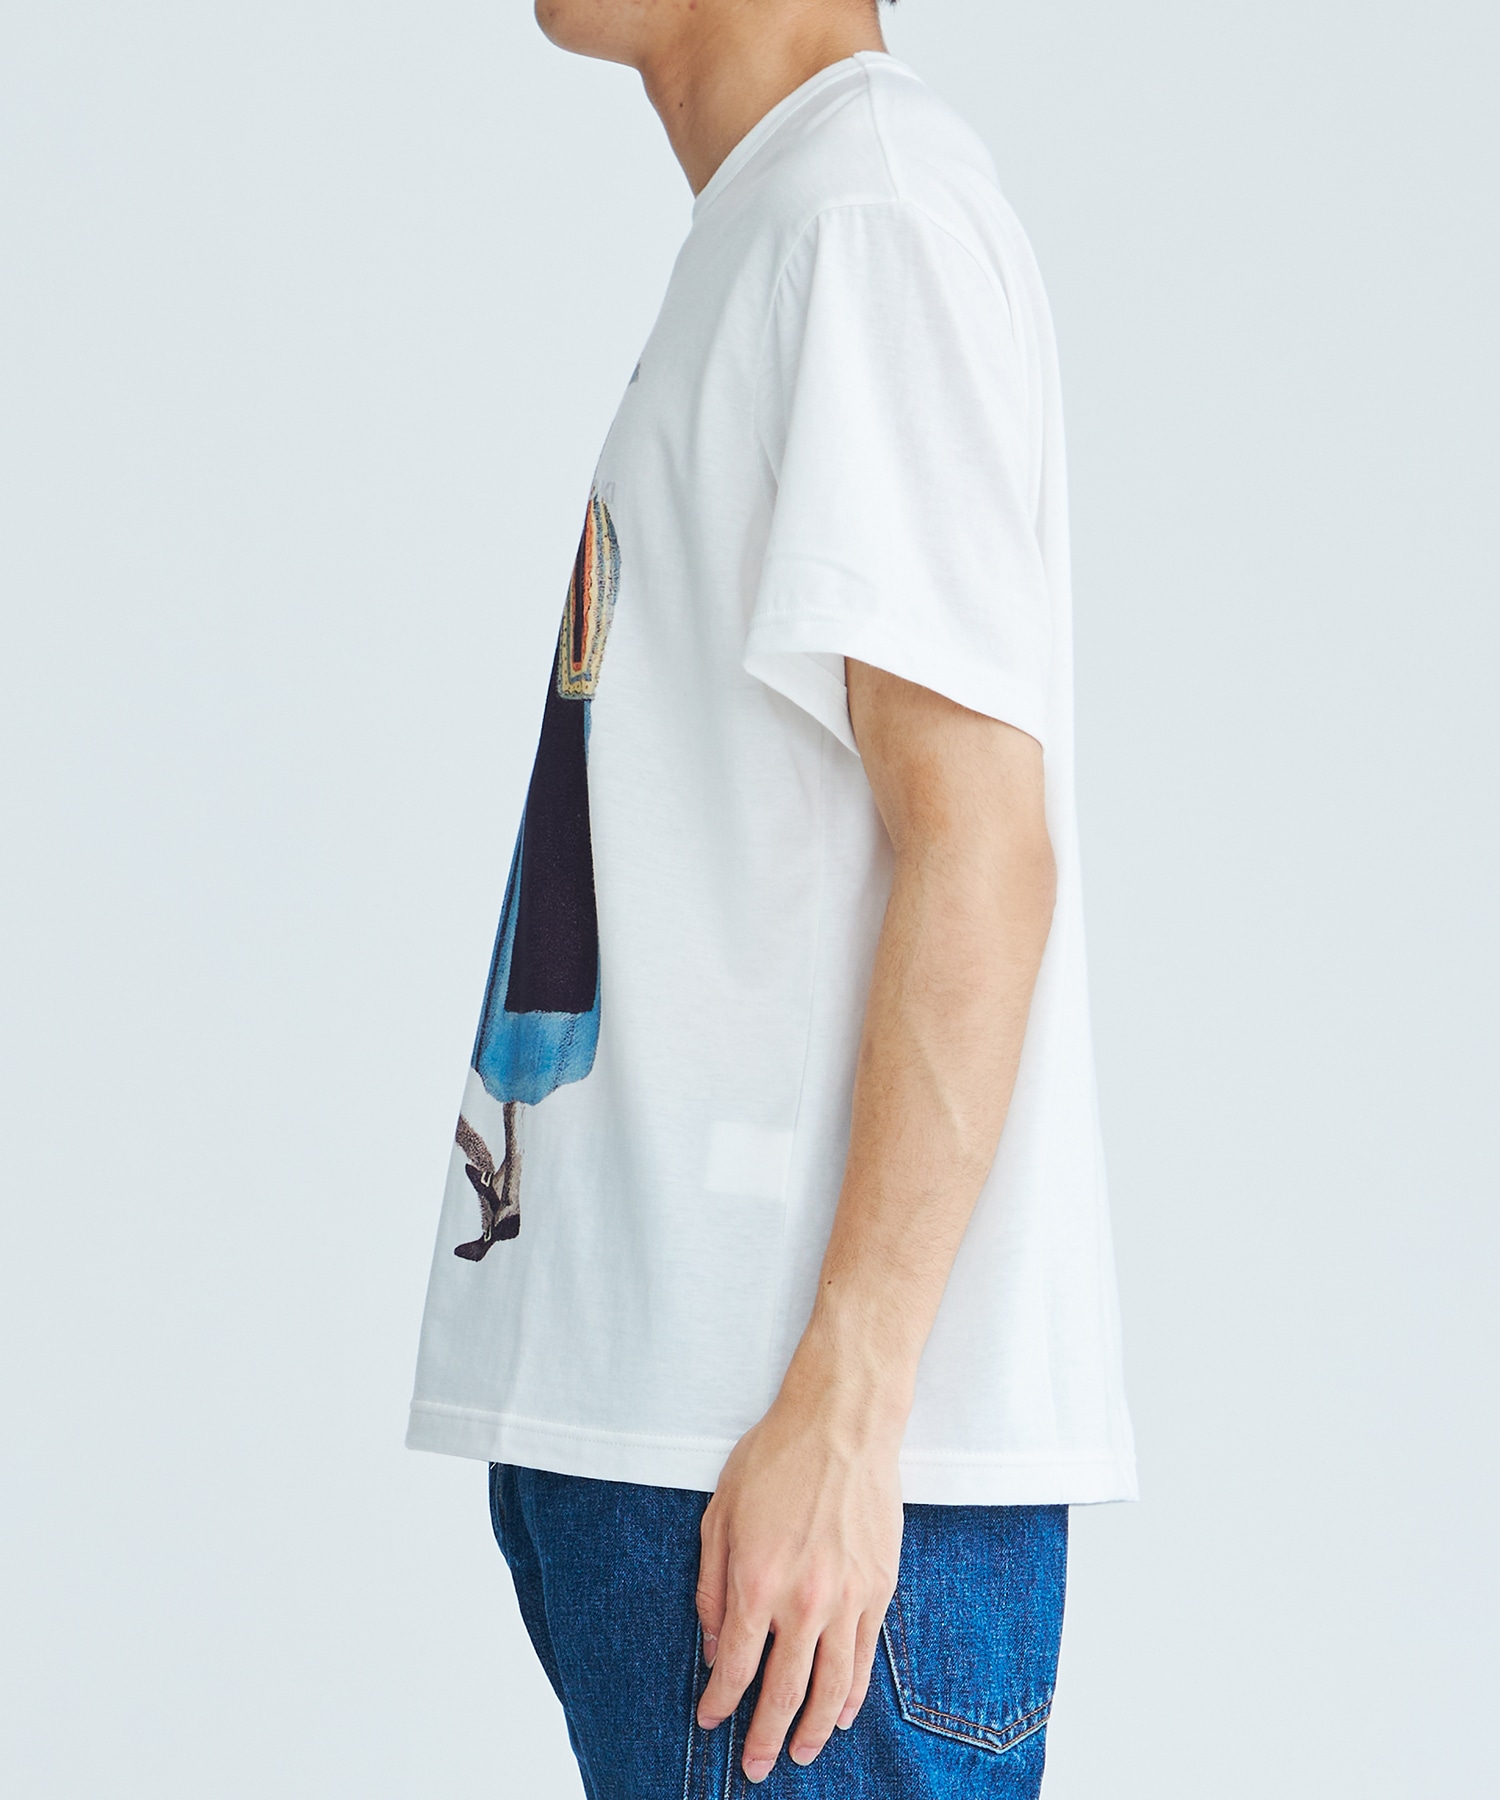 KHOKI / VYG shirt (TYPE-B) (23ss-t-01-B) 【特価】 www.sweatbrasil